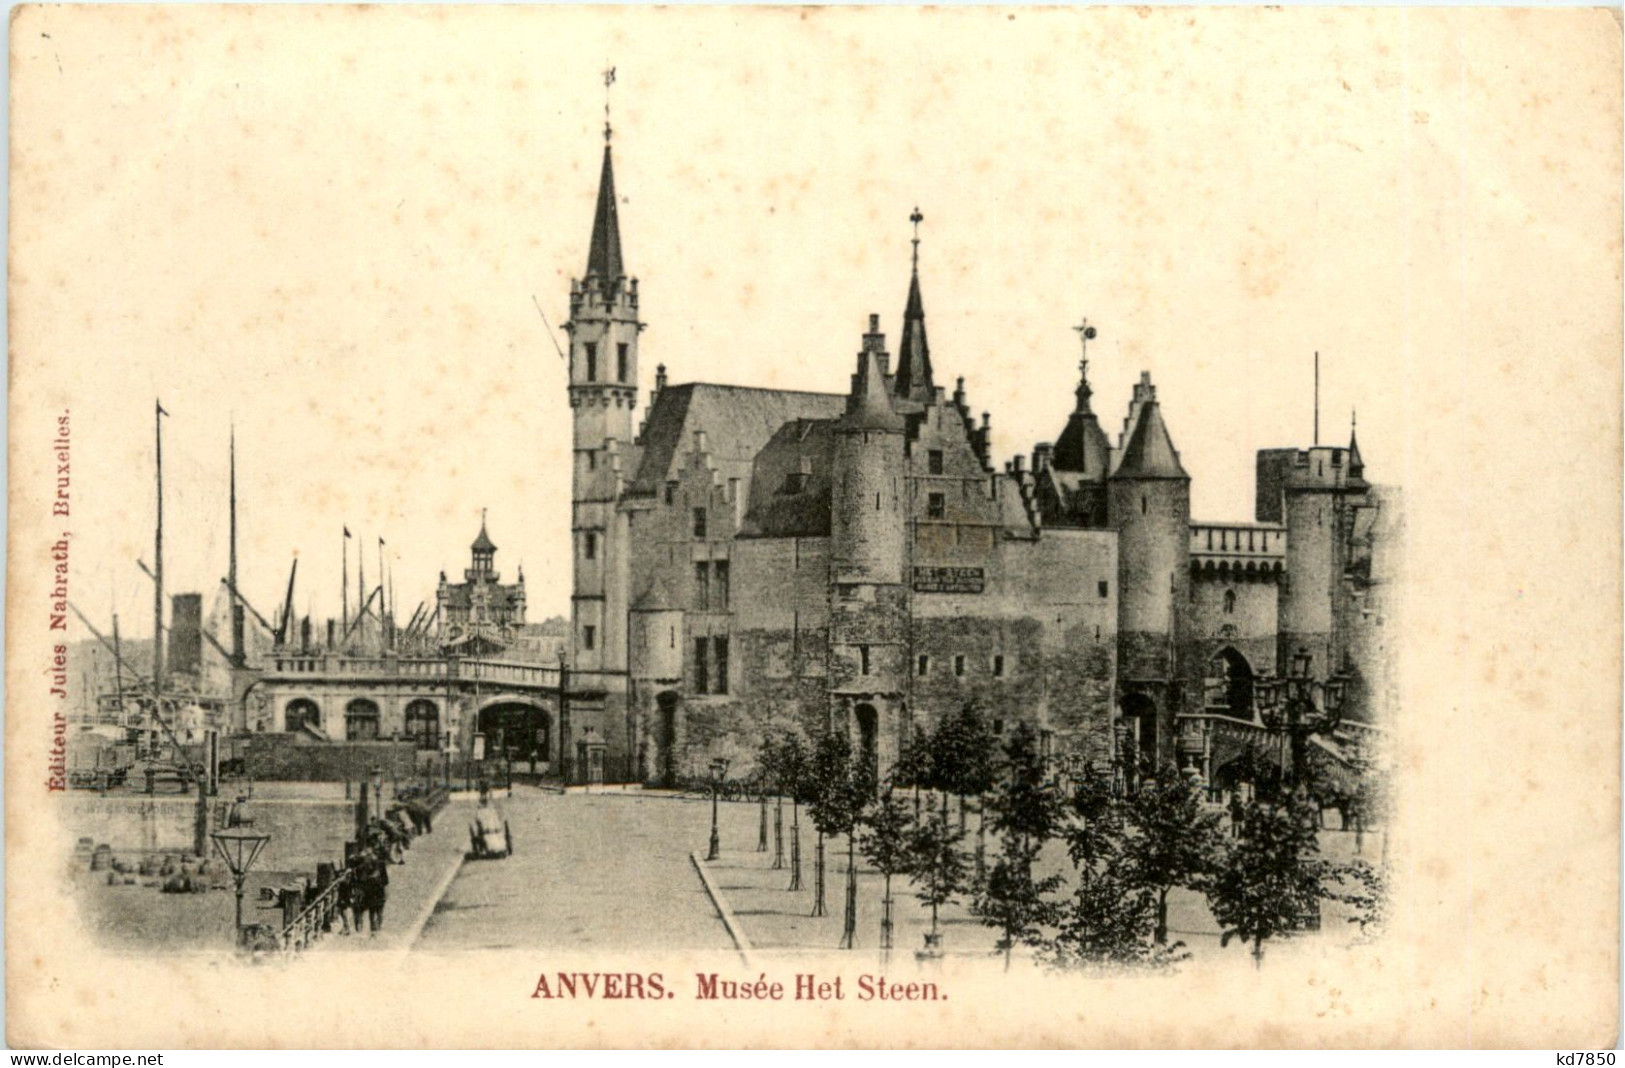 Anvers - Musee Het Steen - Antwerpen